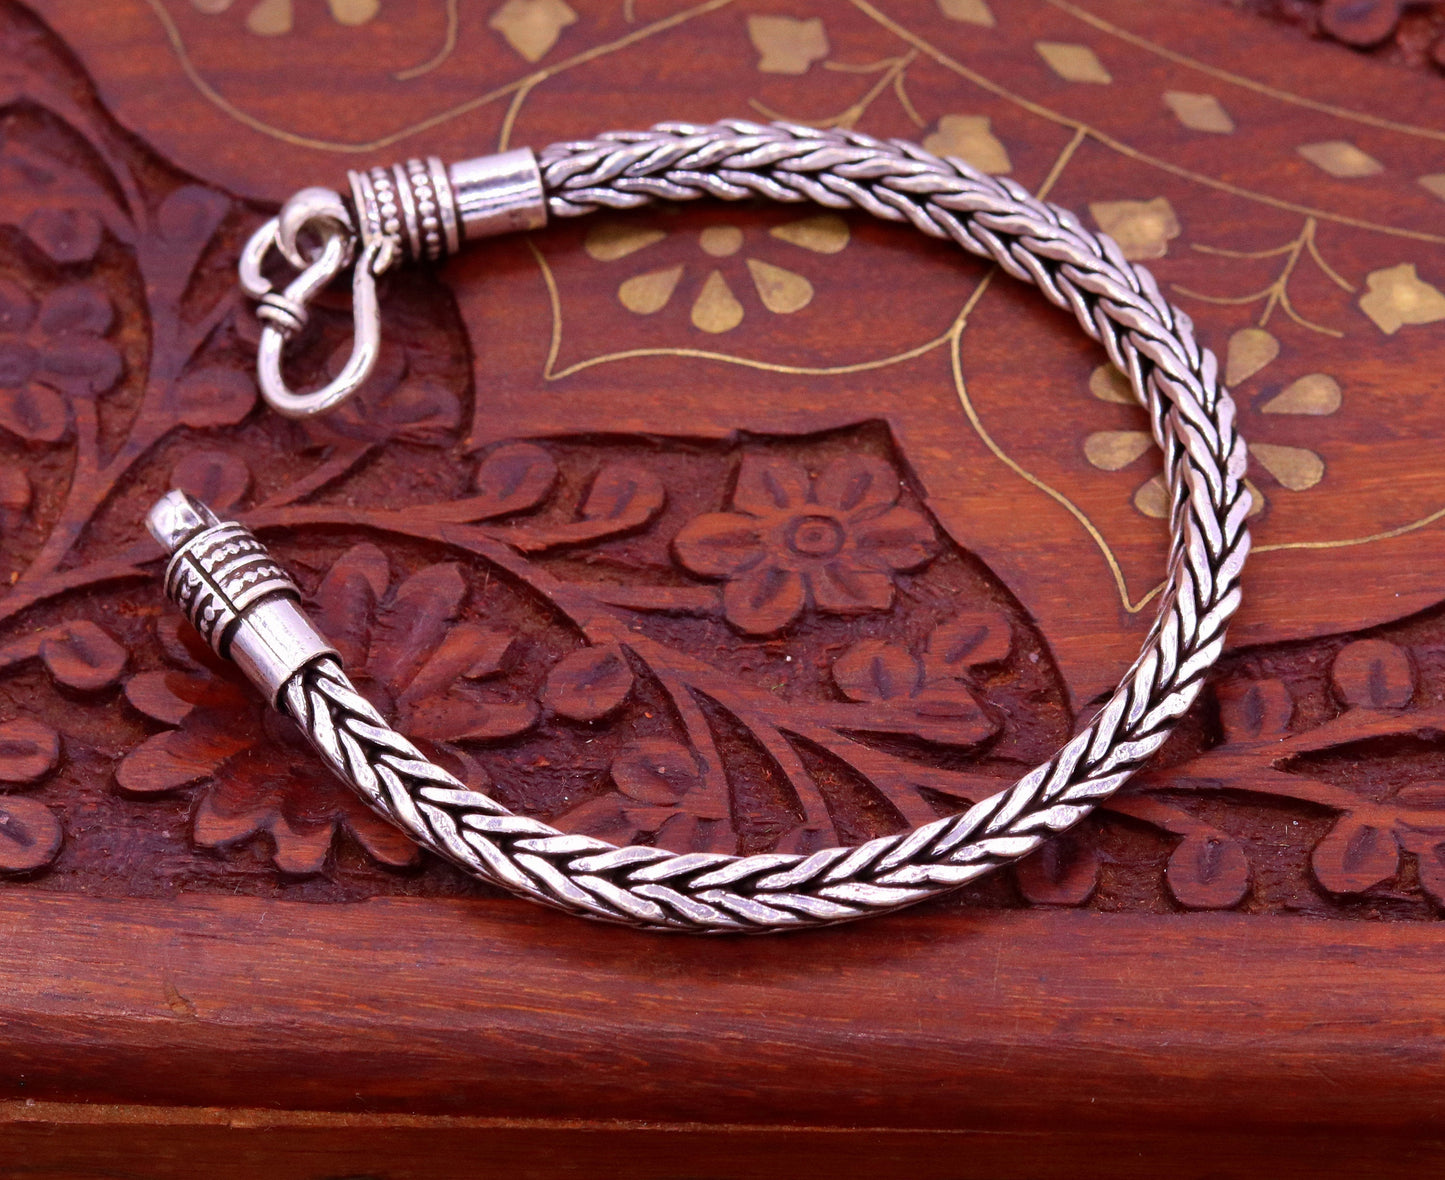 Amazing wheat square shape design handmade 925 sterling silver bracelet ,oxidized stylish bracelet silver stylish jewelry sbr134 - TRIBAL ORNAMENTS